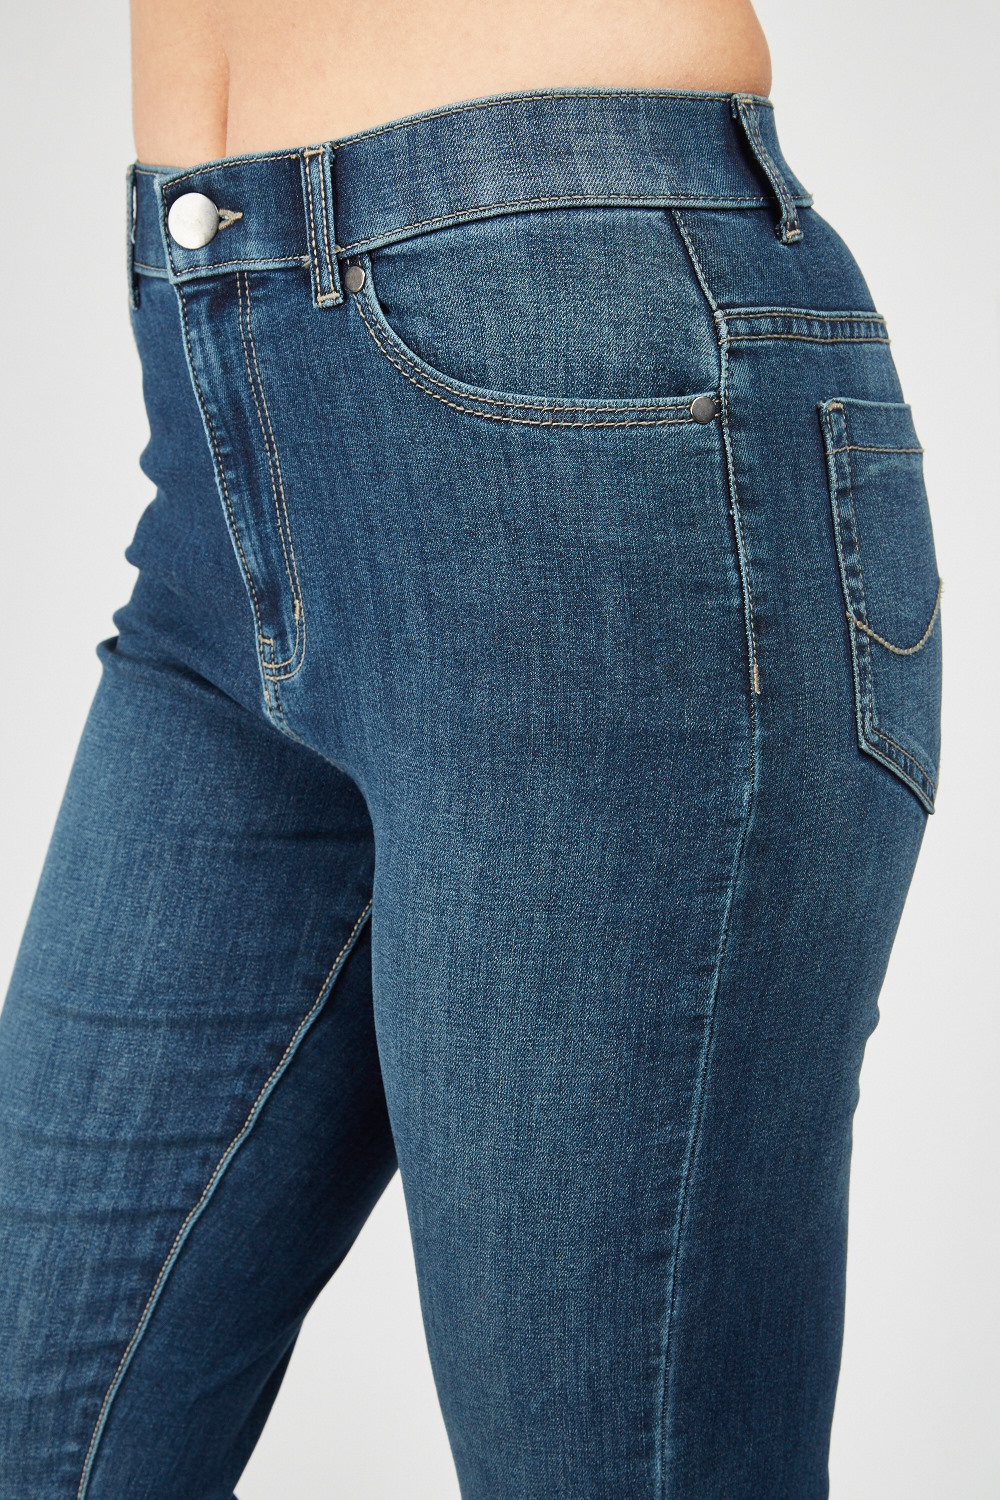 Skinny Denim Blue Jeans - Just $6